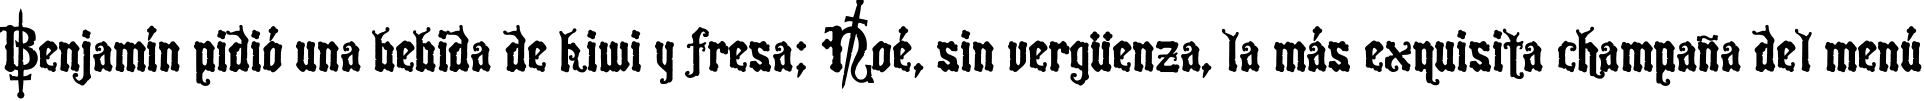 Пример написания шрифтом Crusades текста на испанском